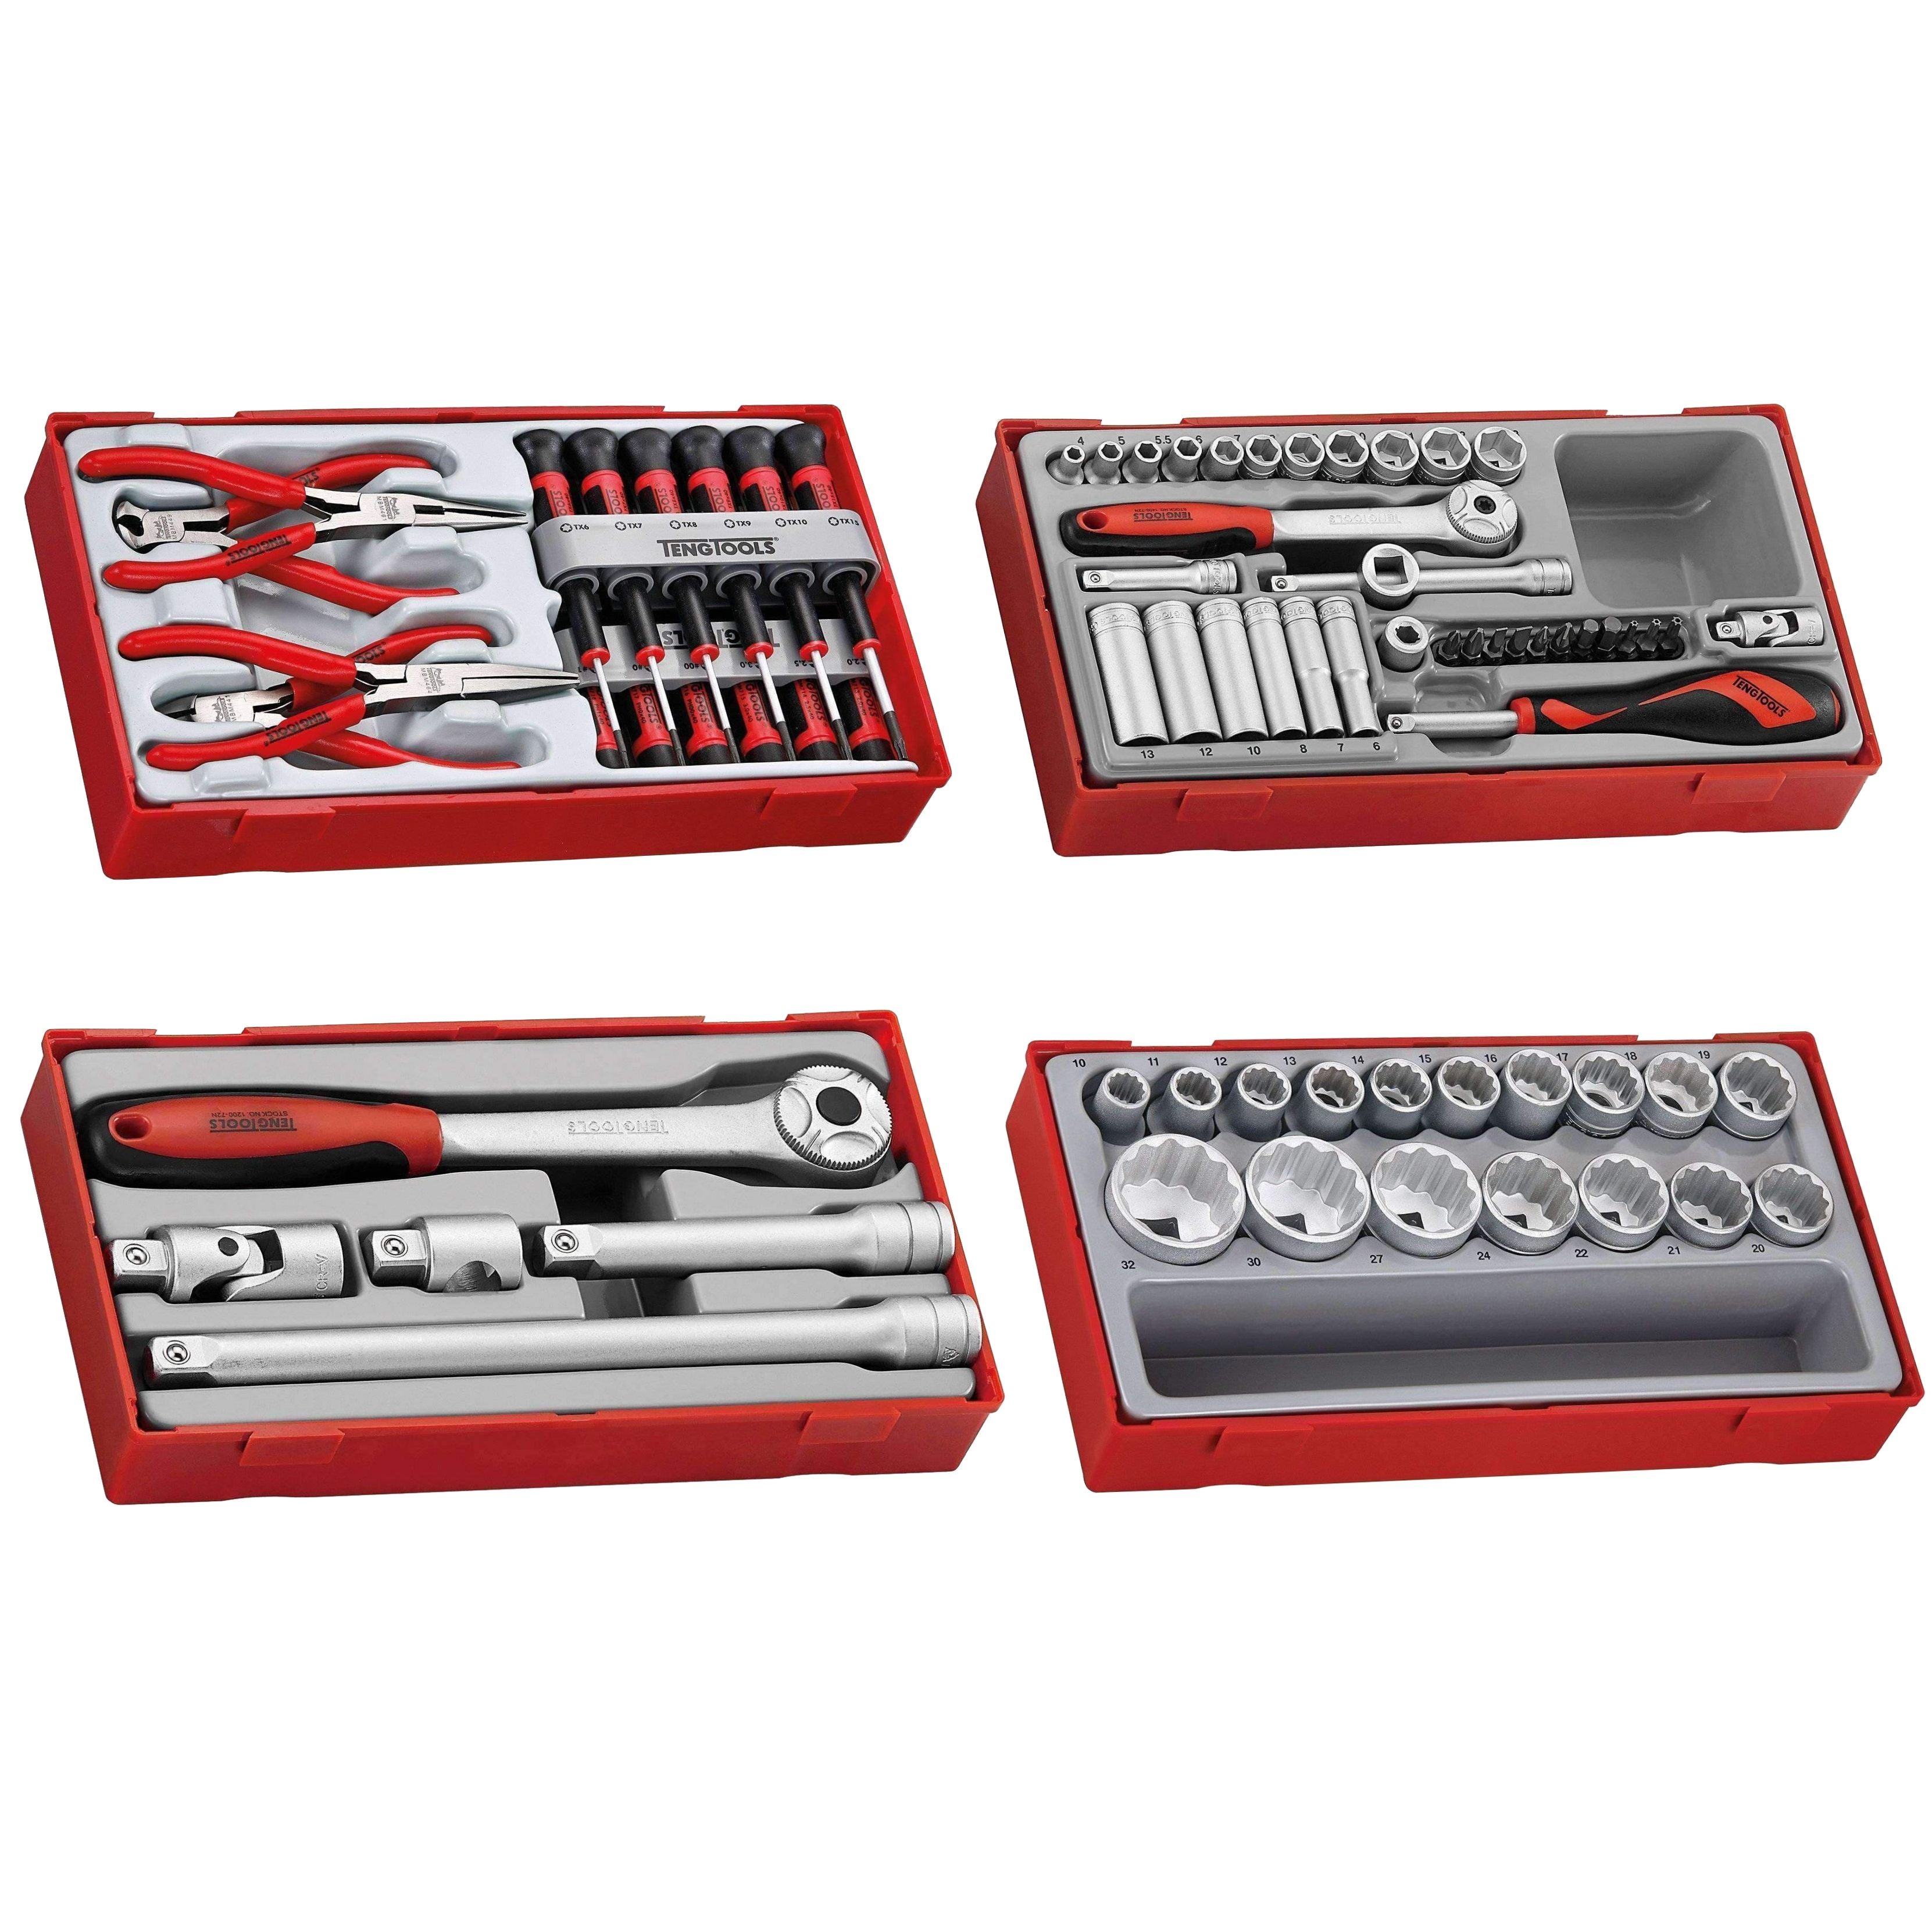 Teng Tools 288 Piece Complete Mixed General Hand Tool Kit (Mega Bundle 3) - TCW707EV-KIT4